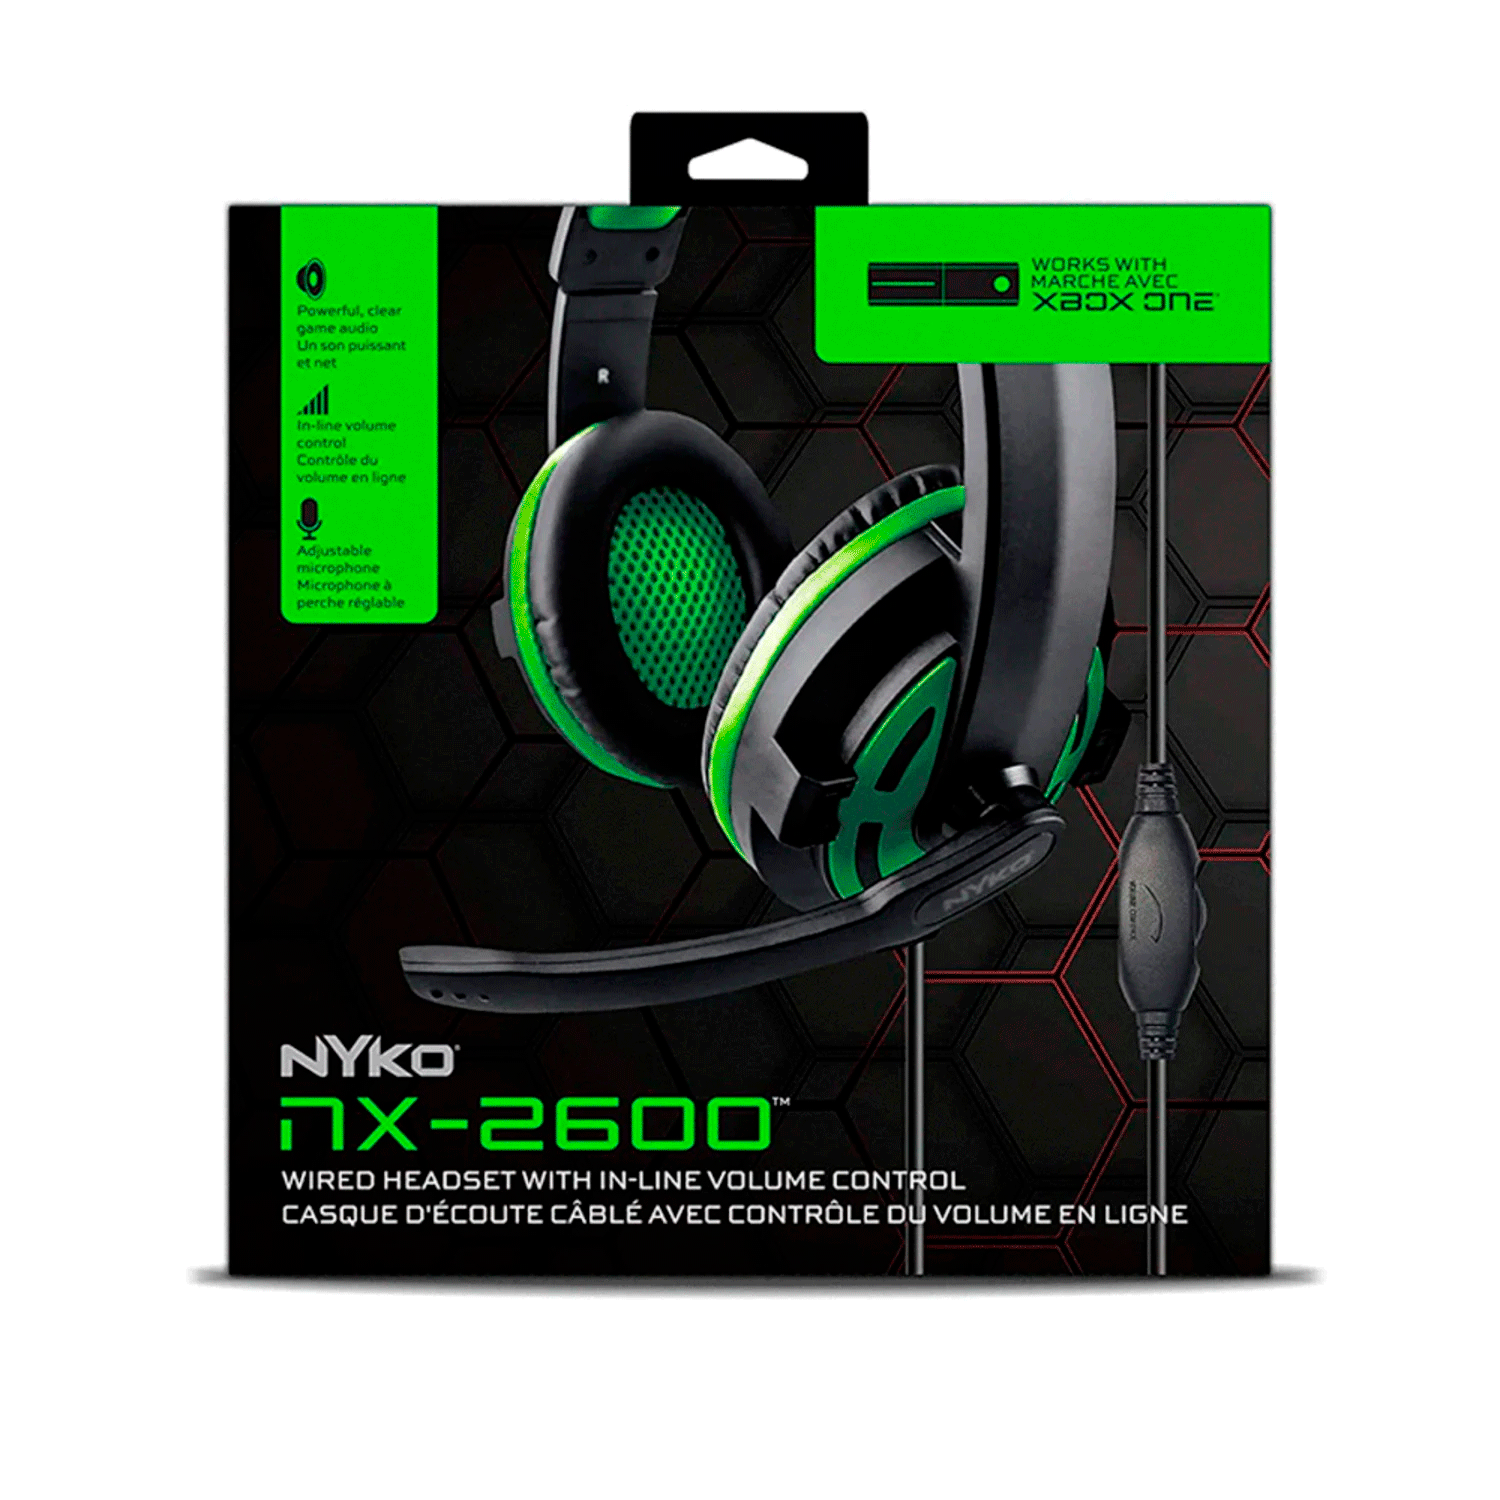 Headset Gamer Nyko NX-2600 para Xbox One - (862611)